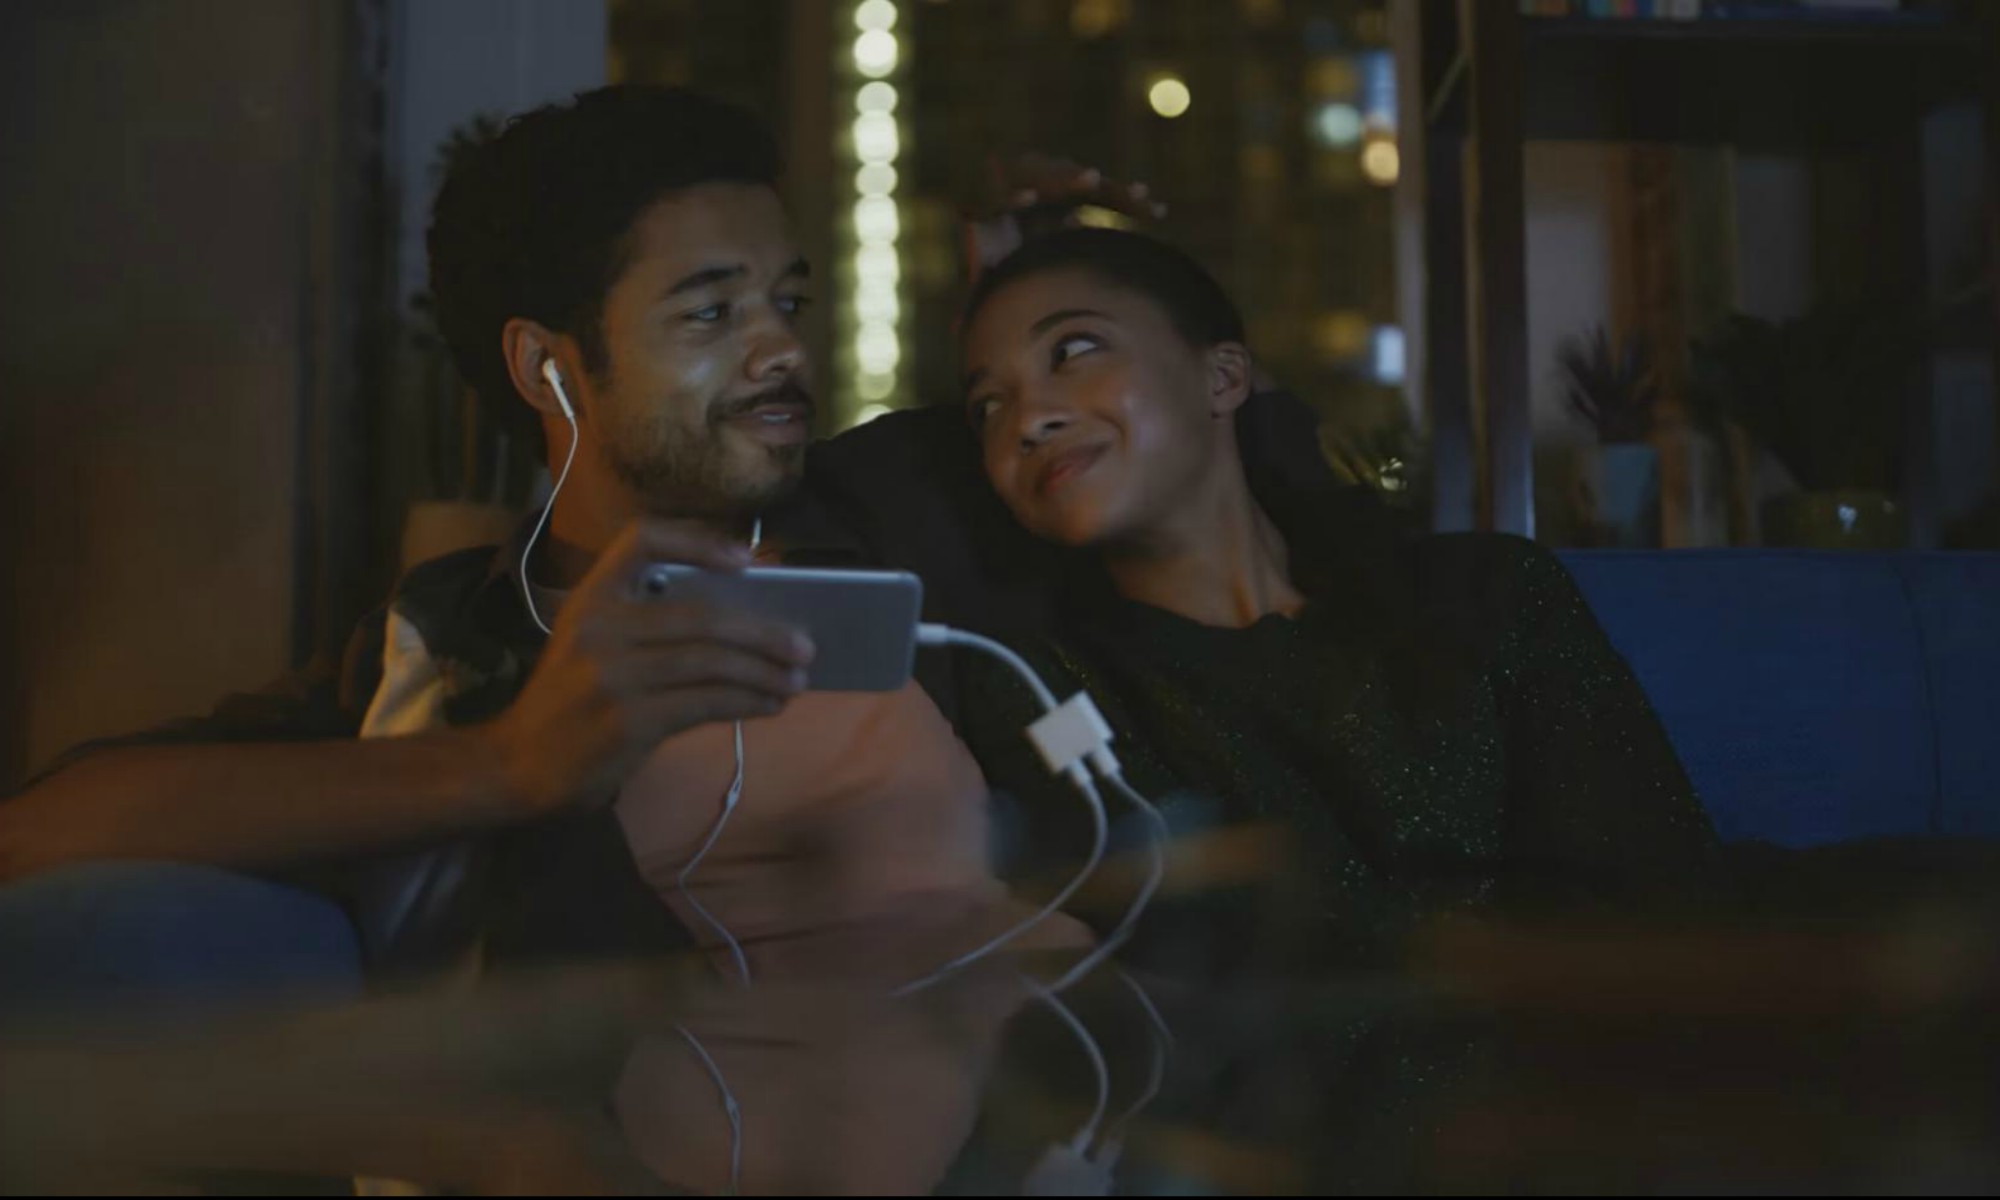 Samsung Apple Werbung Video Bashing Handy Smartphone